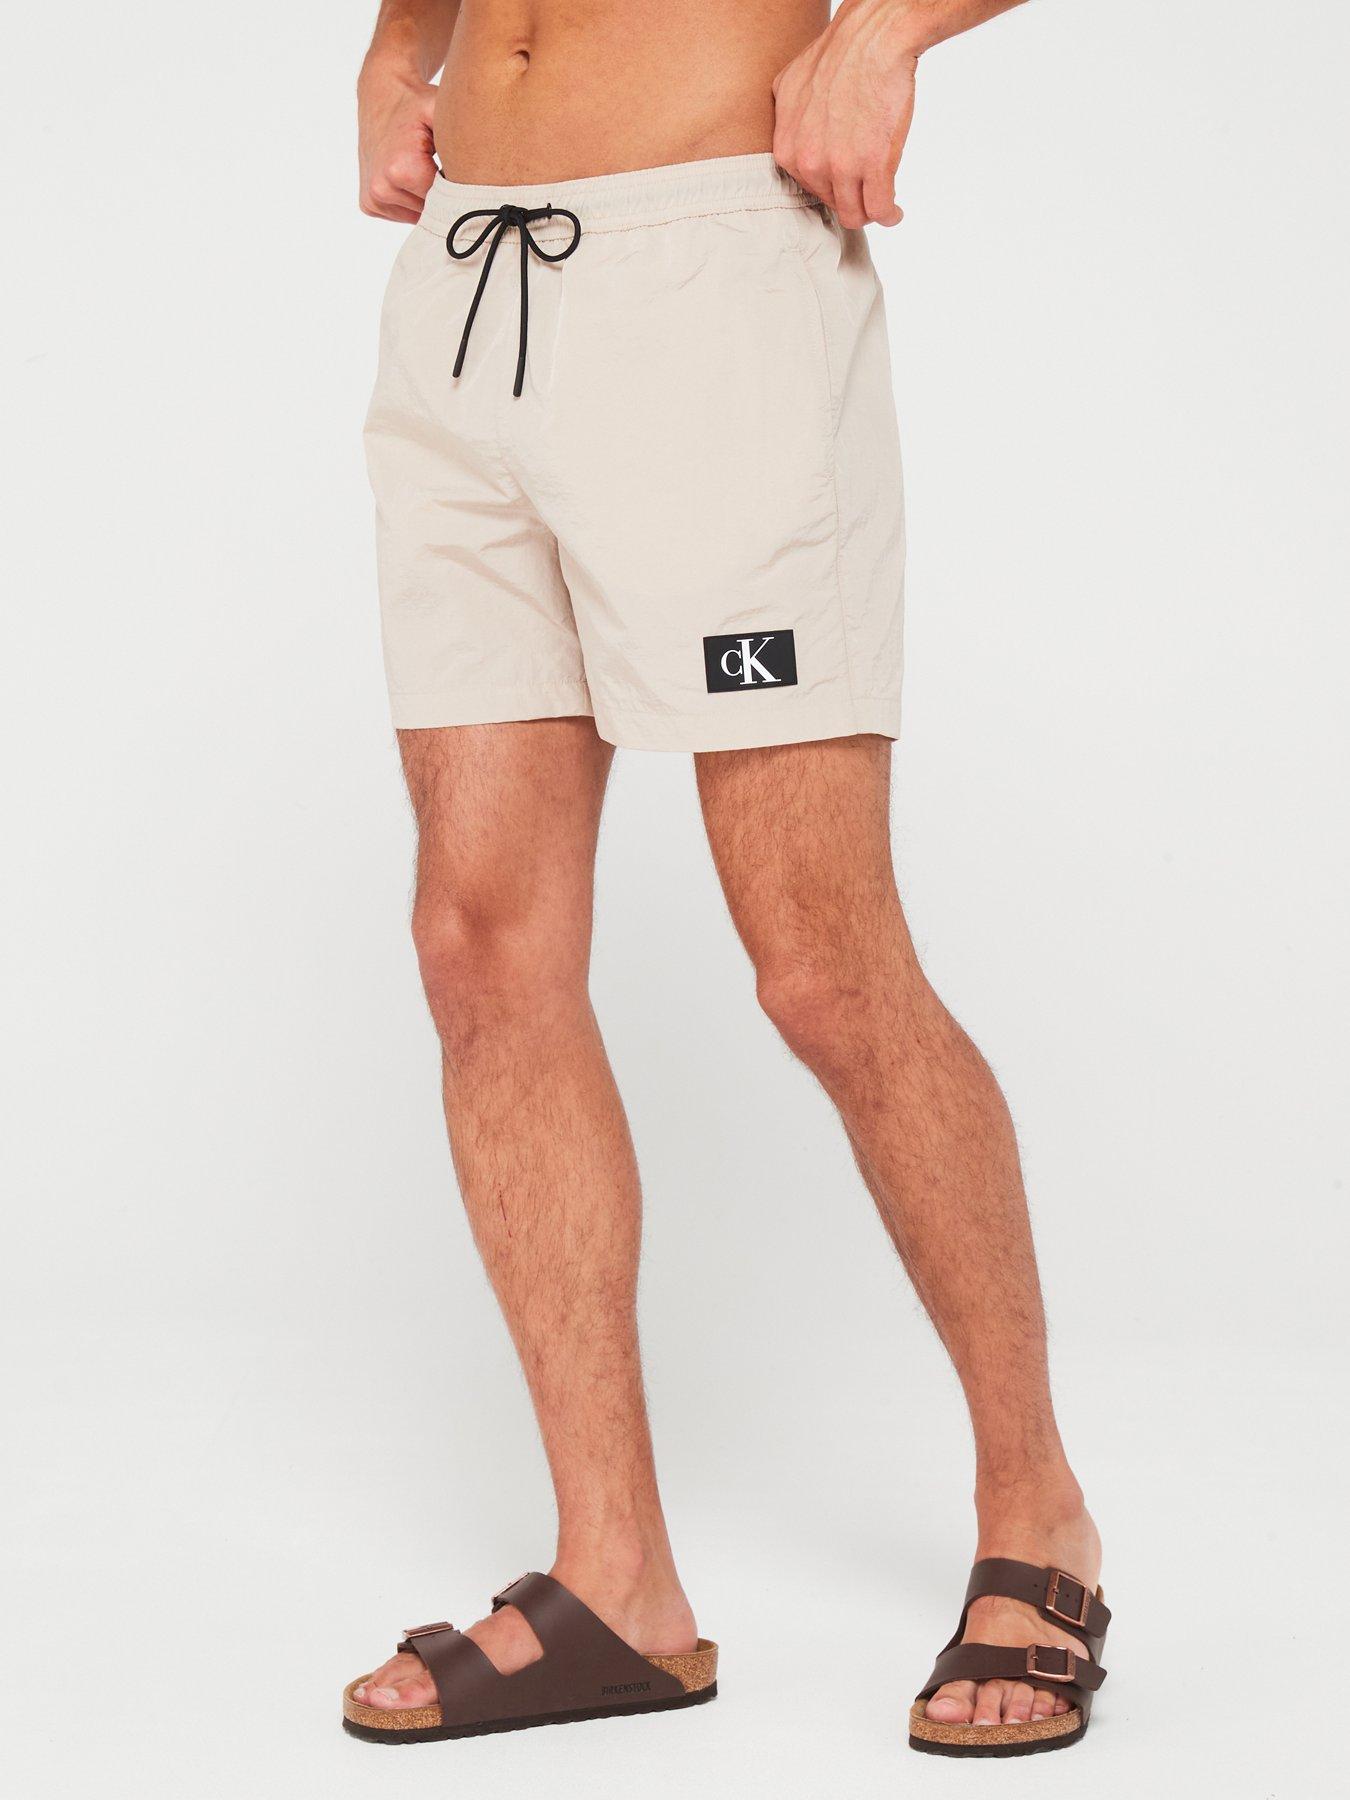 Calvin Klein Medium Drawstring Swim Shorts - Stone, Light Grey, Size 2Xl, Men